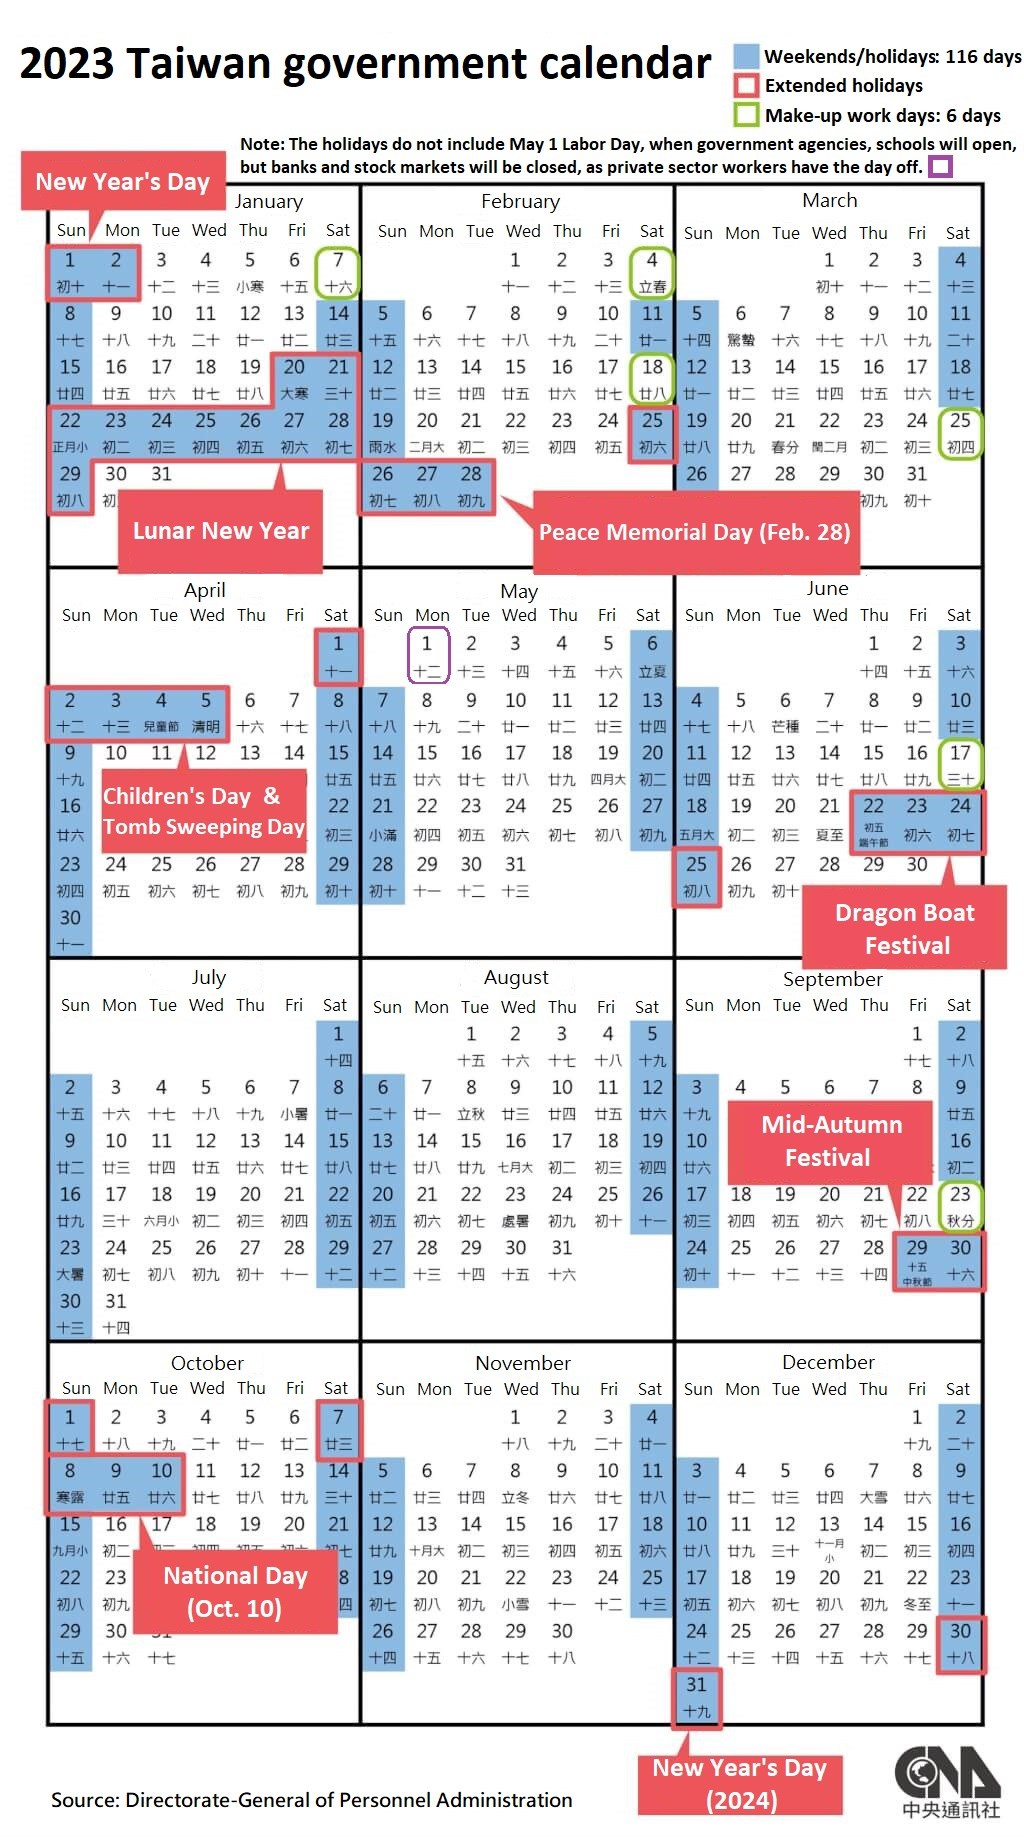 Government Announces Public Holiday Calendar For 2023 Focus Taiwan